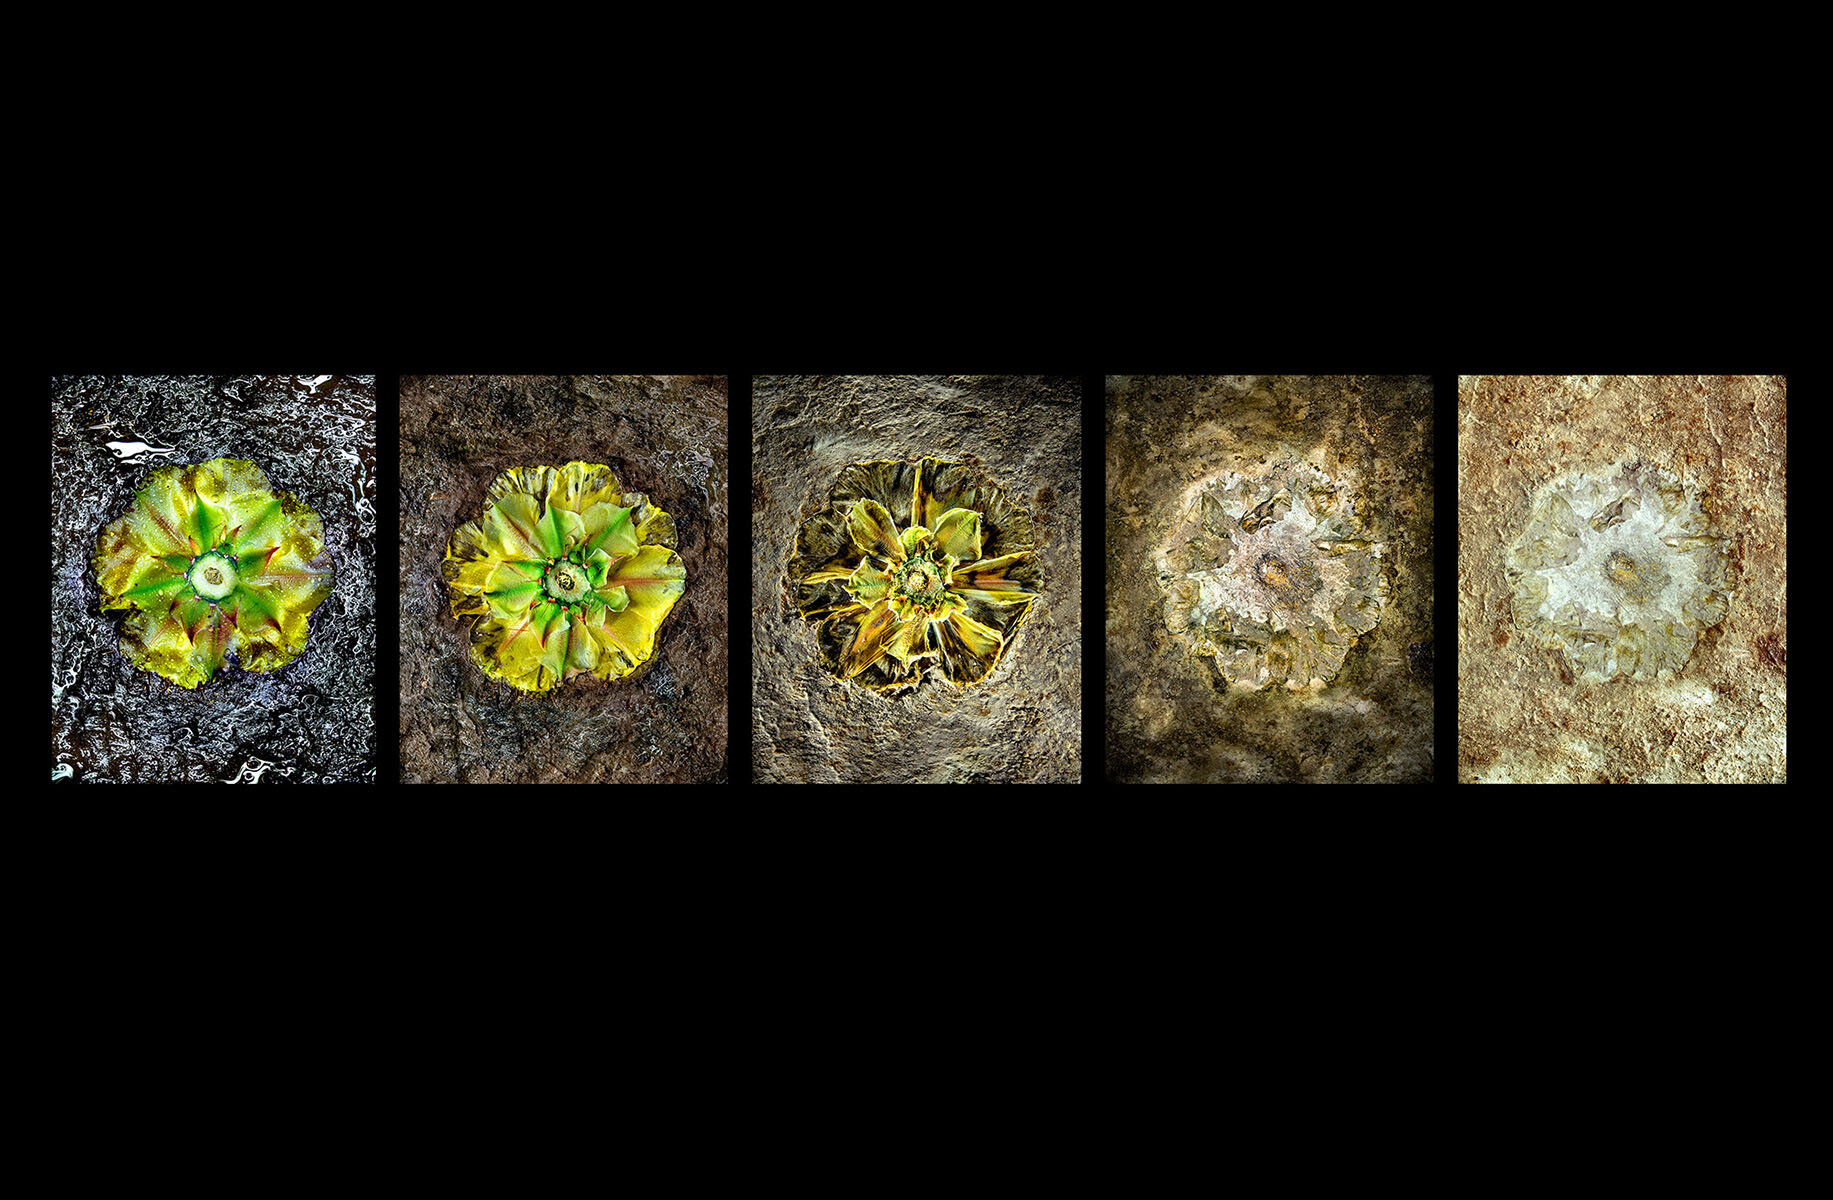 Cactus Flower Progression in Adobe, Five Panel, for RBG